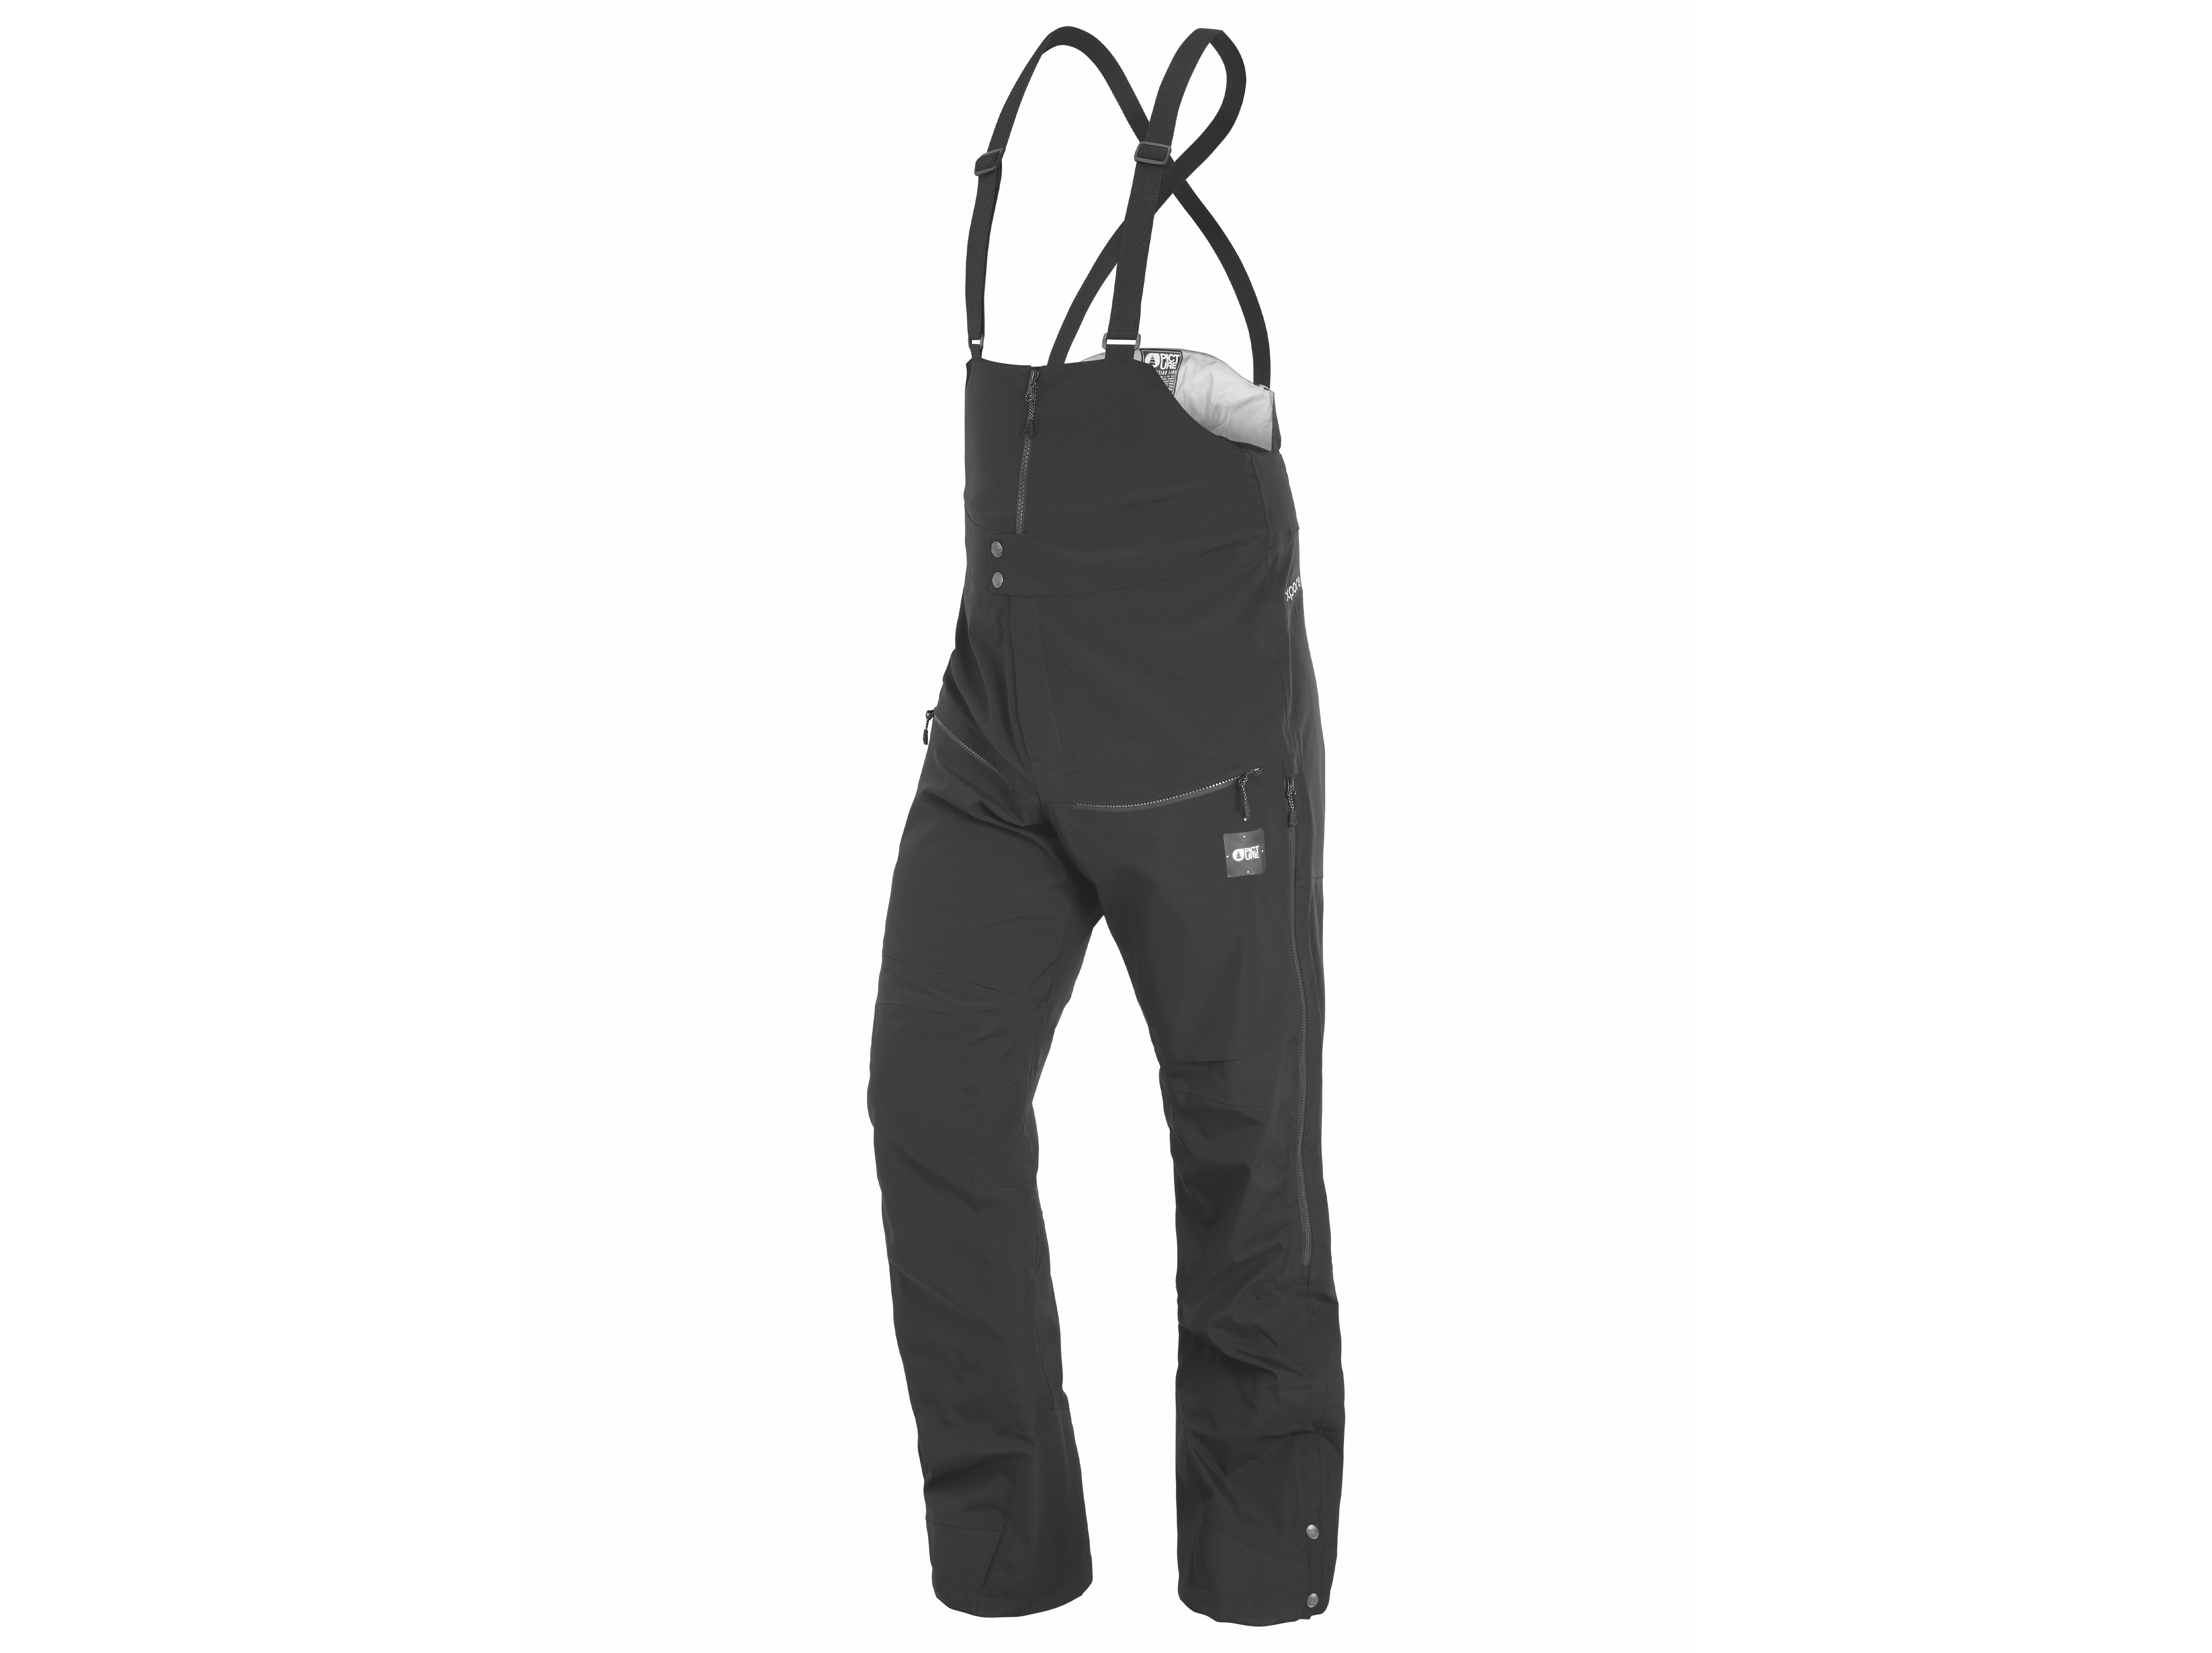 Winter Windproof Waterproof Insulated Snow Pants Warm Fleece Lined Stretch Hiking Pants Womens Classic Ski Pants 